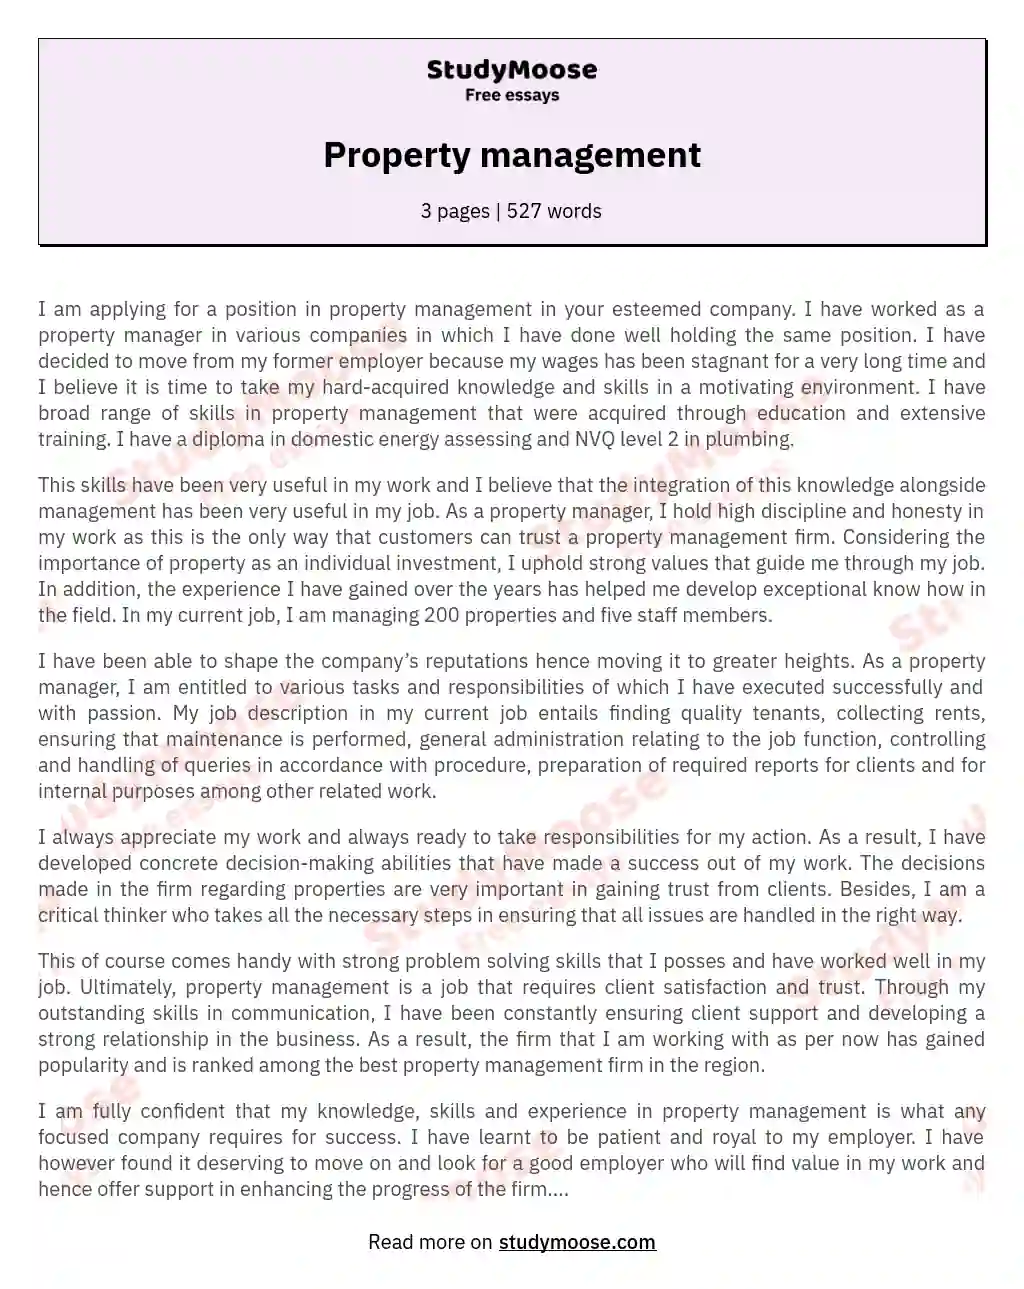 Property management essay